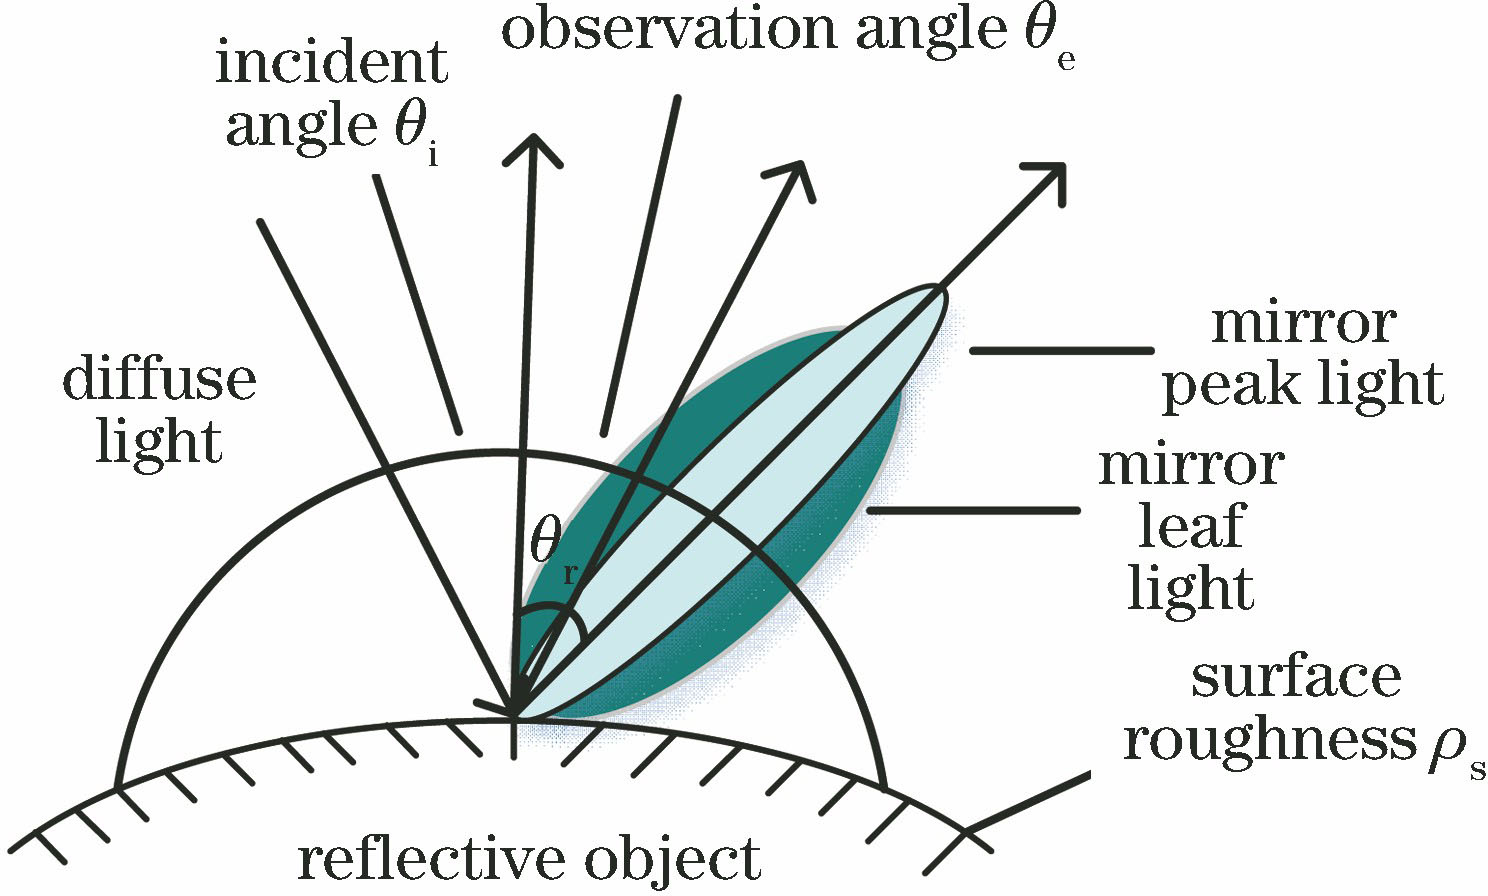 Illumination model of high reflection surface